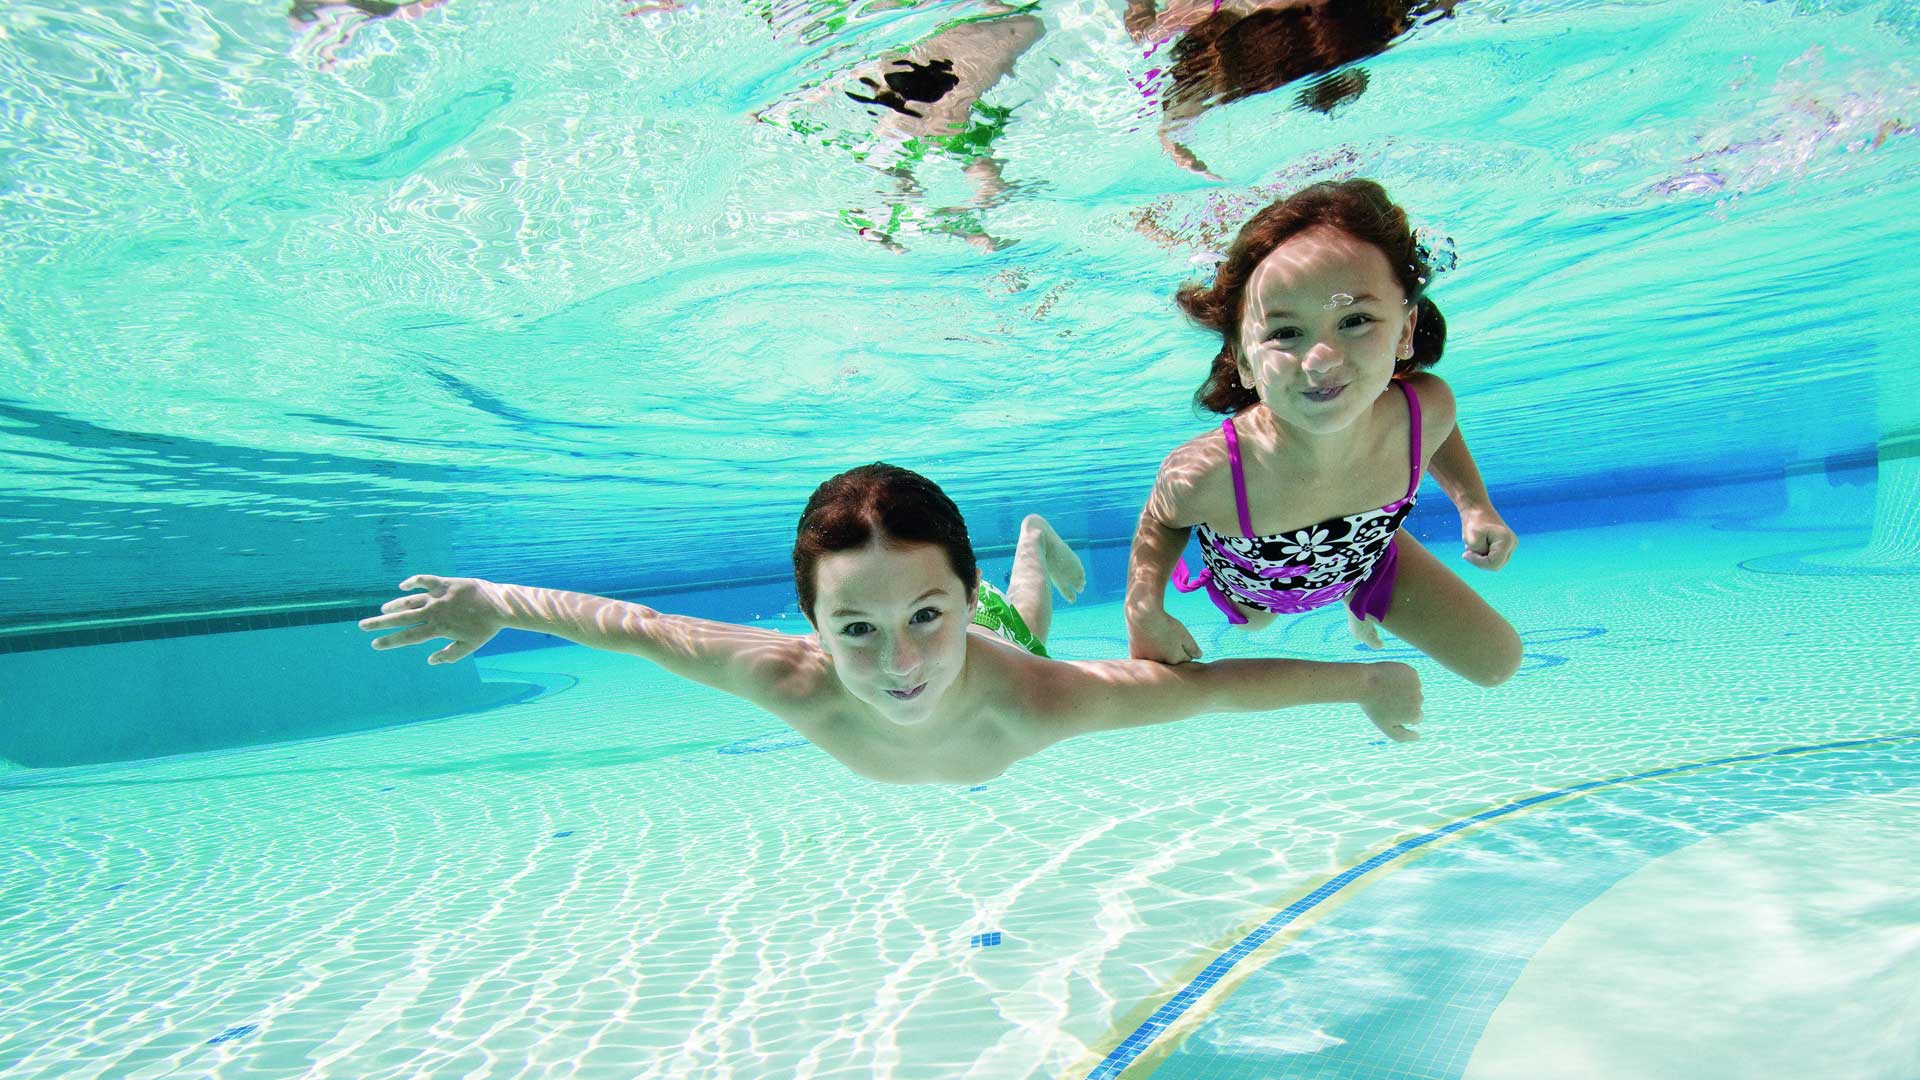 Kids in Swimming Pool Wallpaper